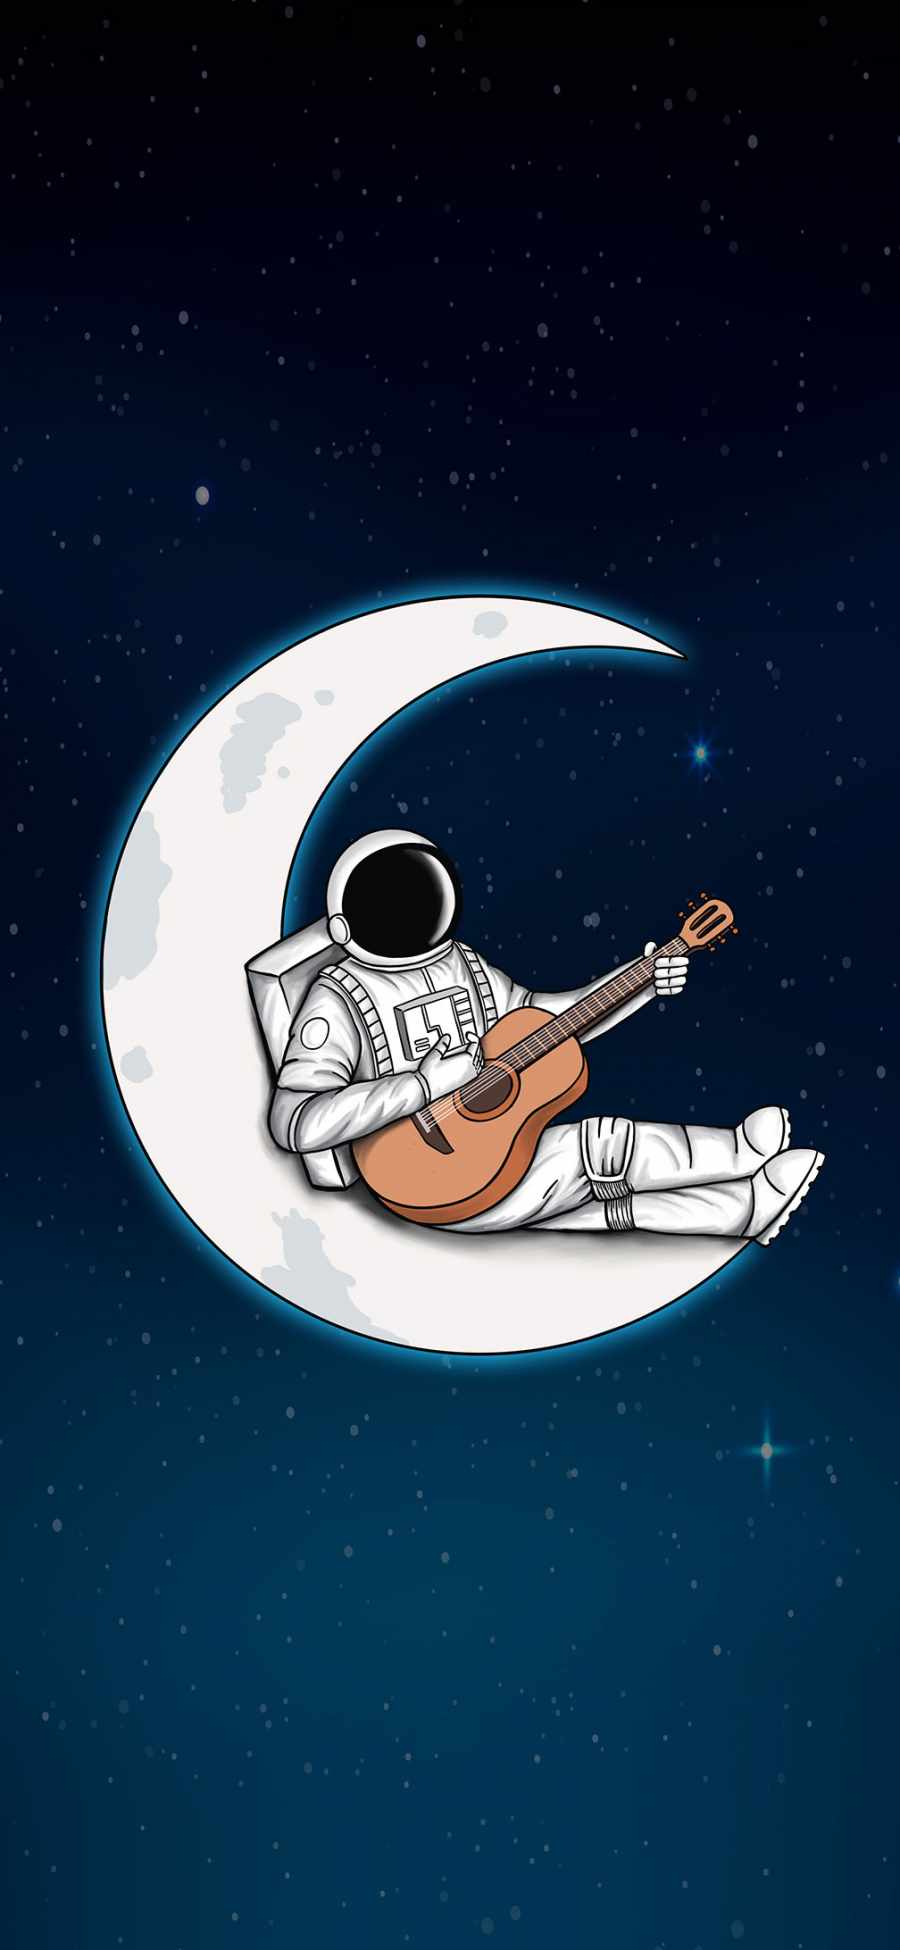 Astronaut and Guitar iPhone Wallpaper